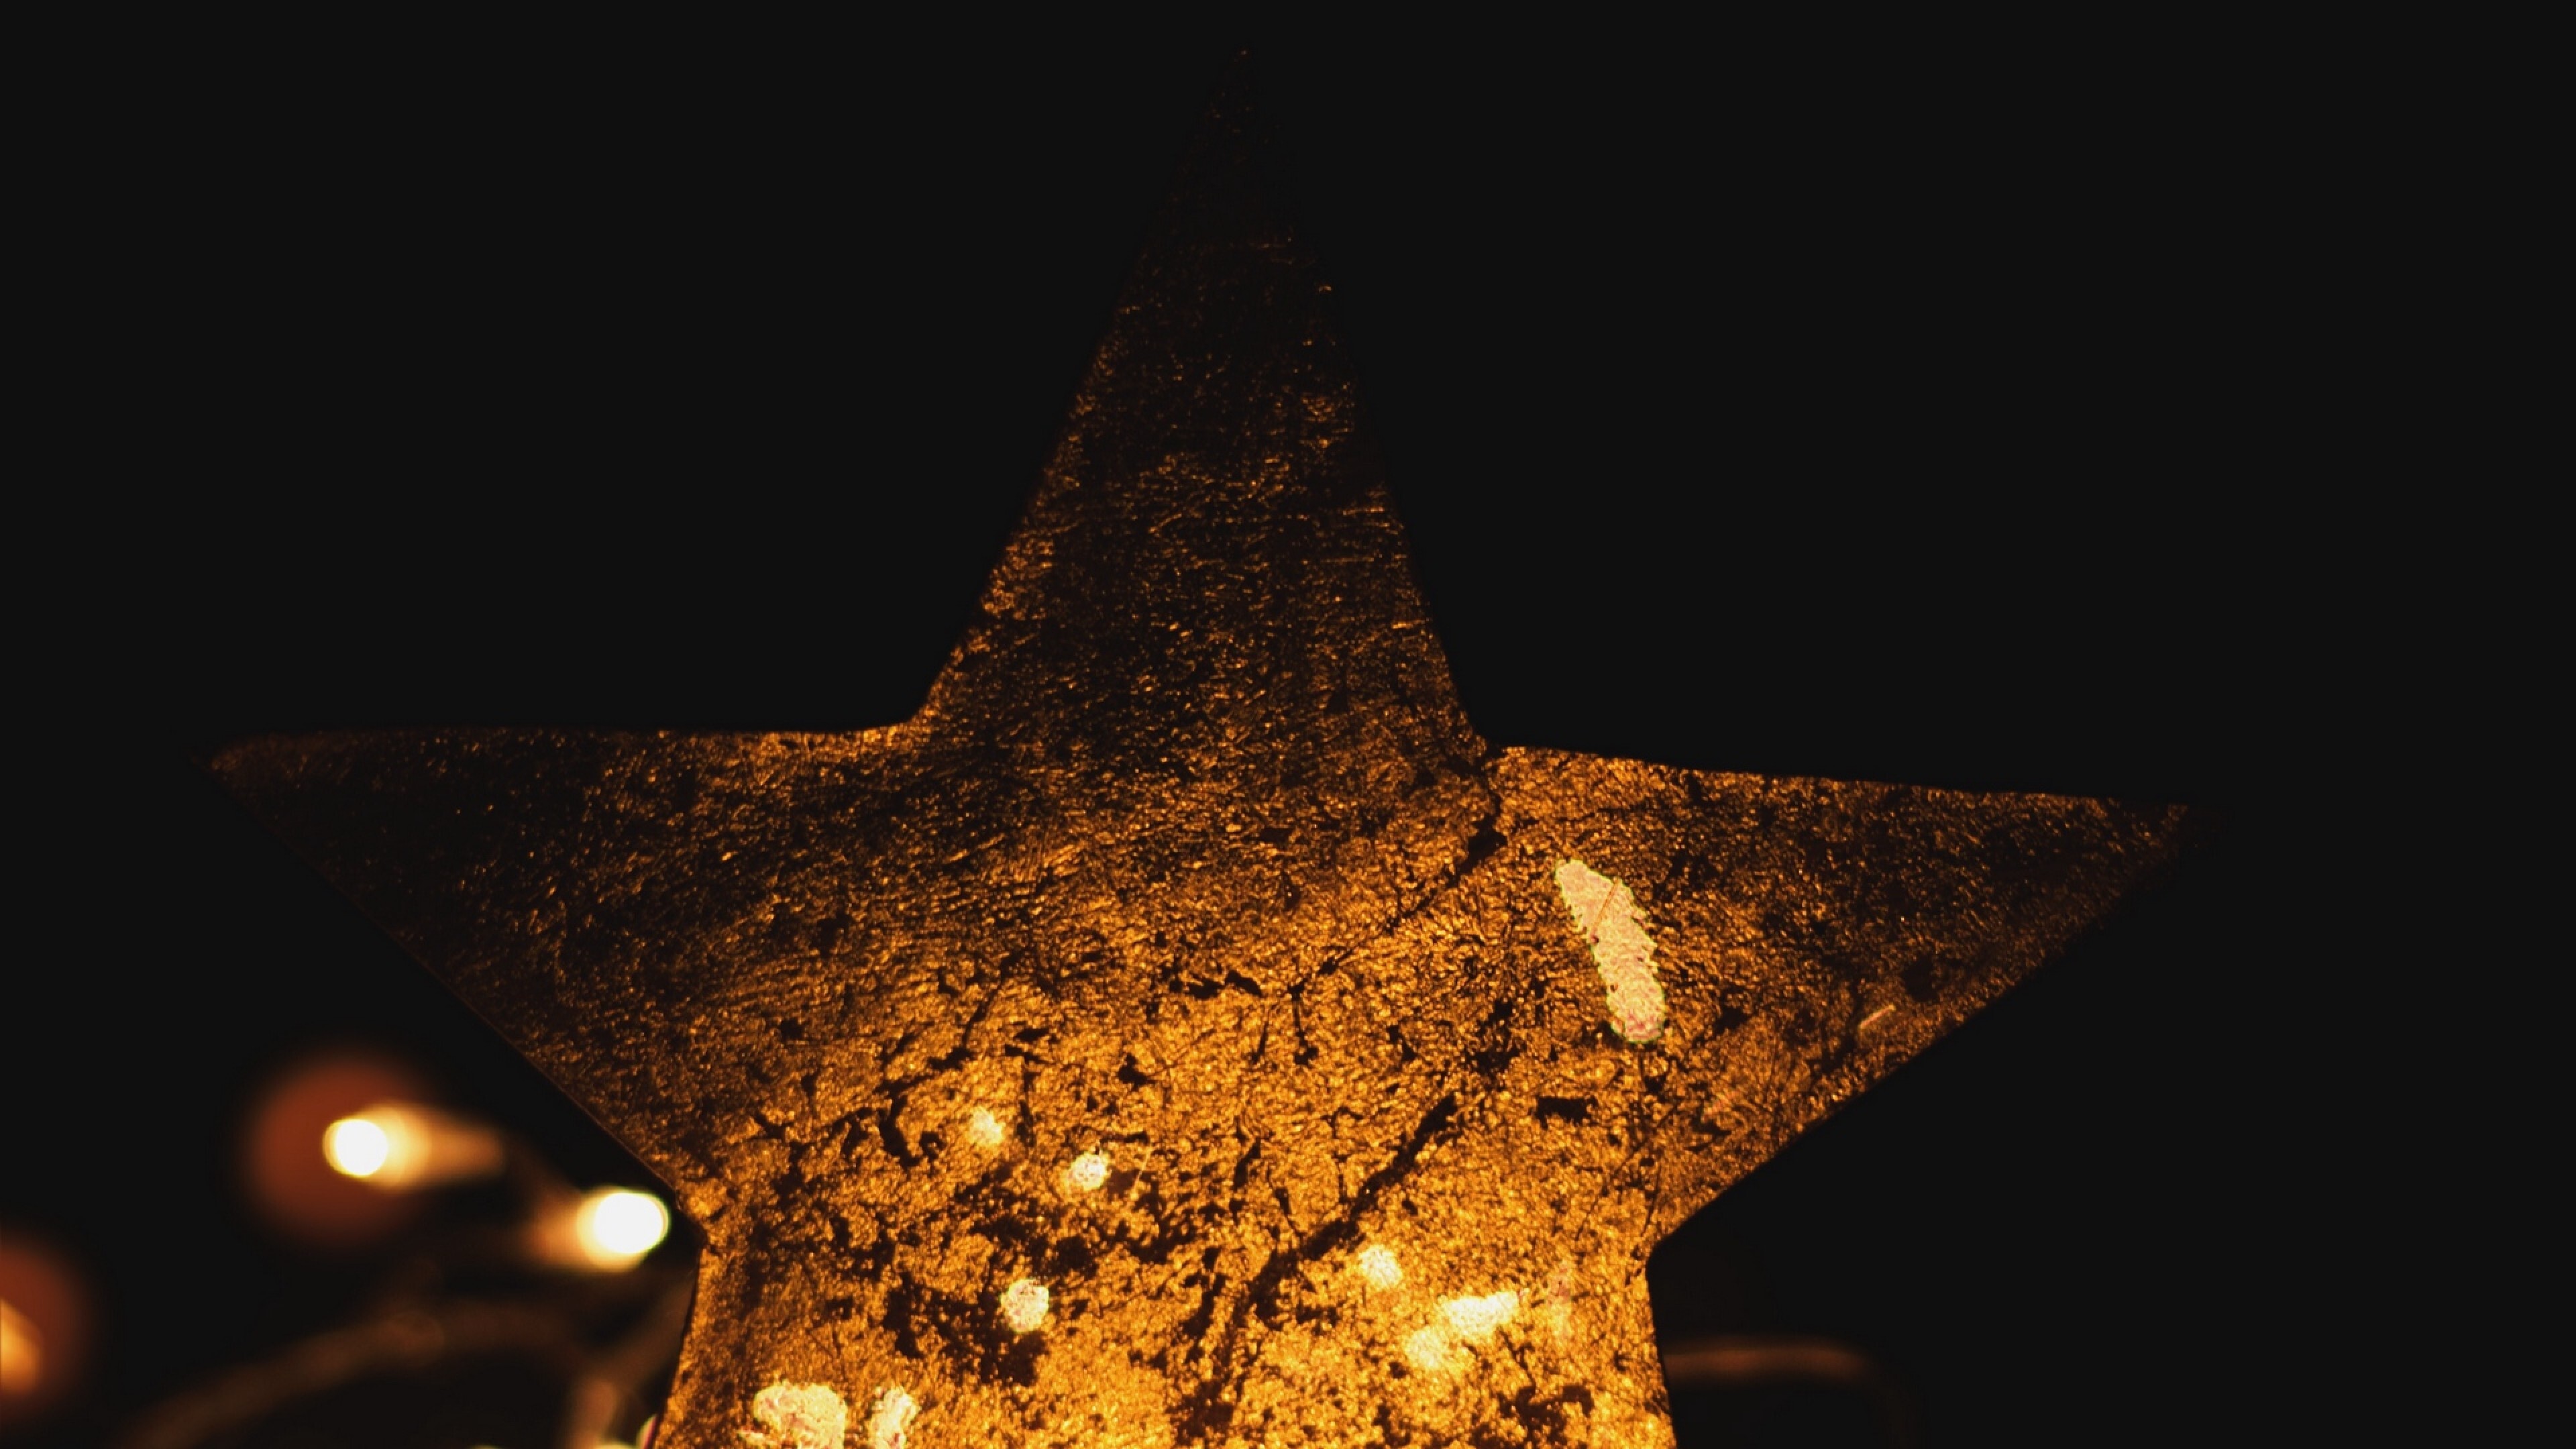 Gold Star: Garland, Elegant tree ornaments, A festive centerpiece for Christmas. 3840x2160 4K Background.